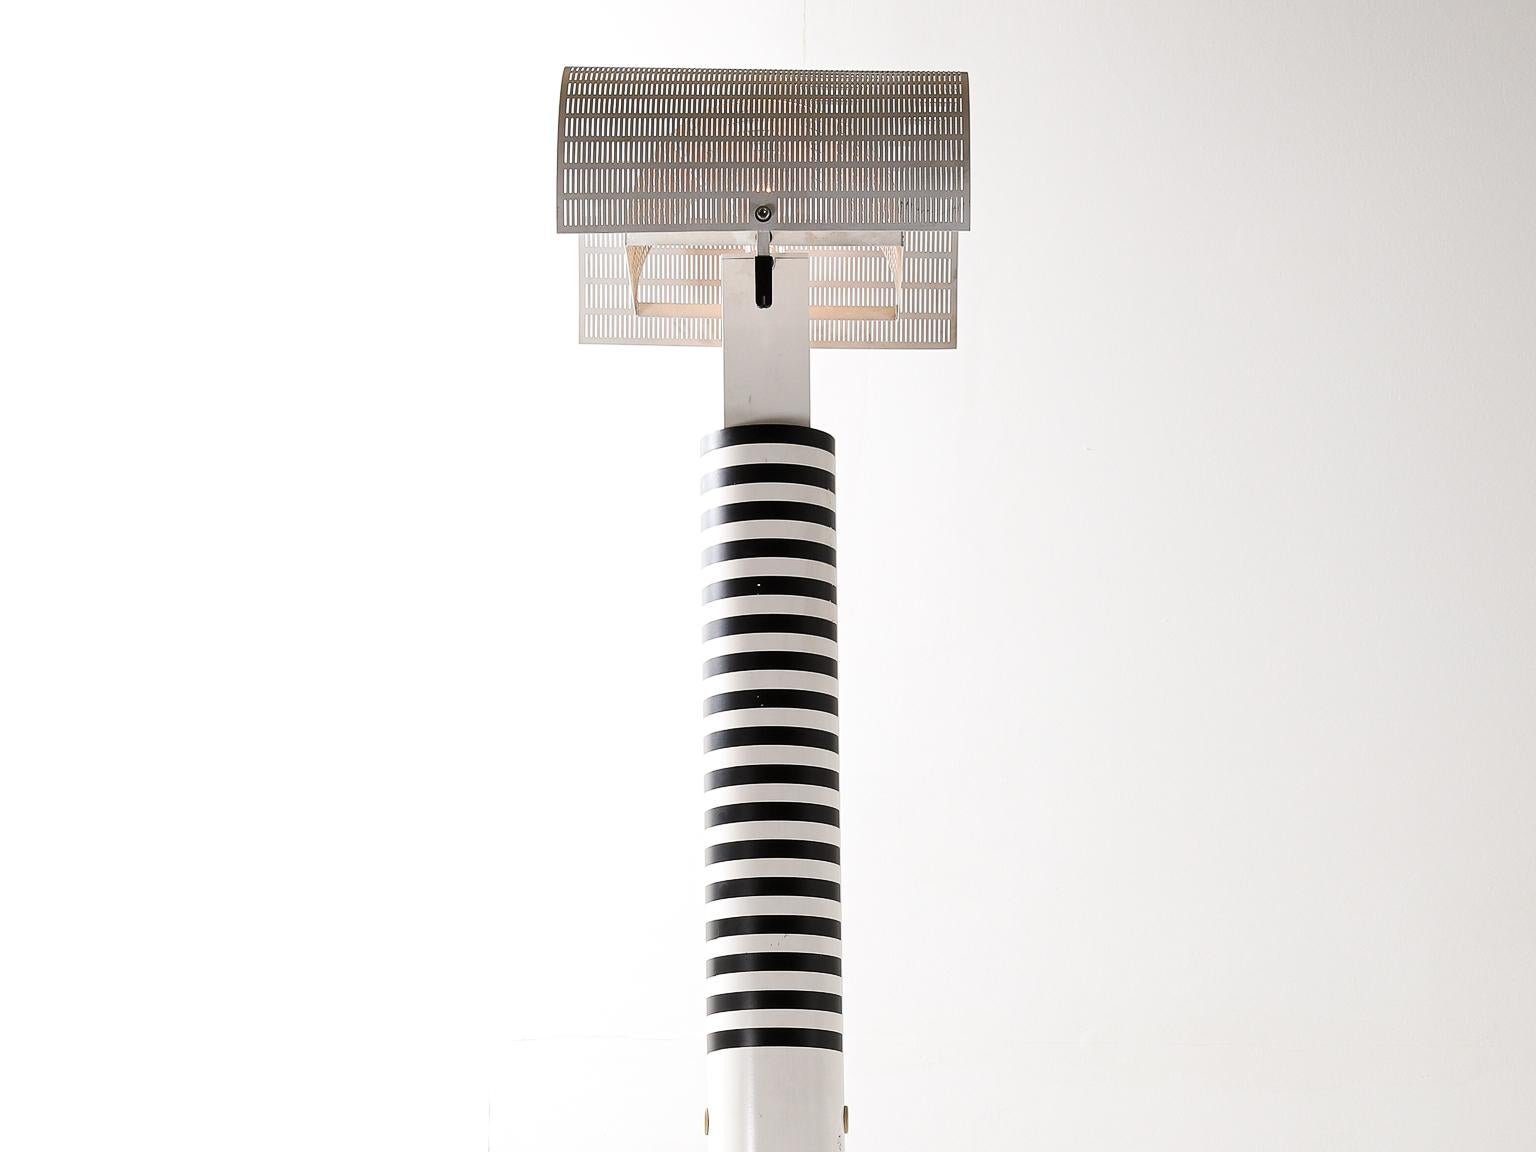 Artemide 'Shogun' 1980s Floor Lamp designed by Mario Botta 5